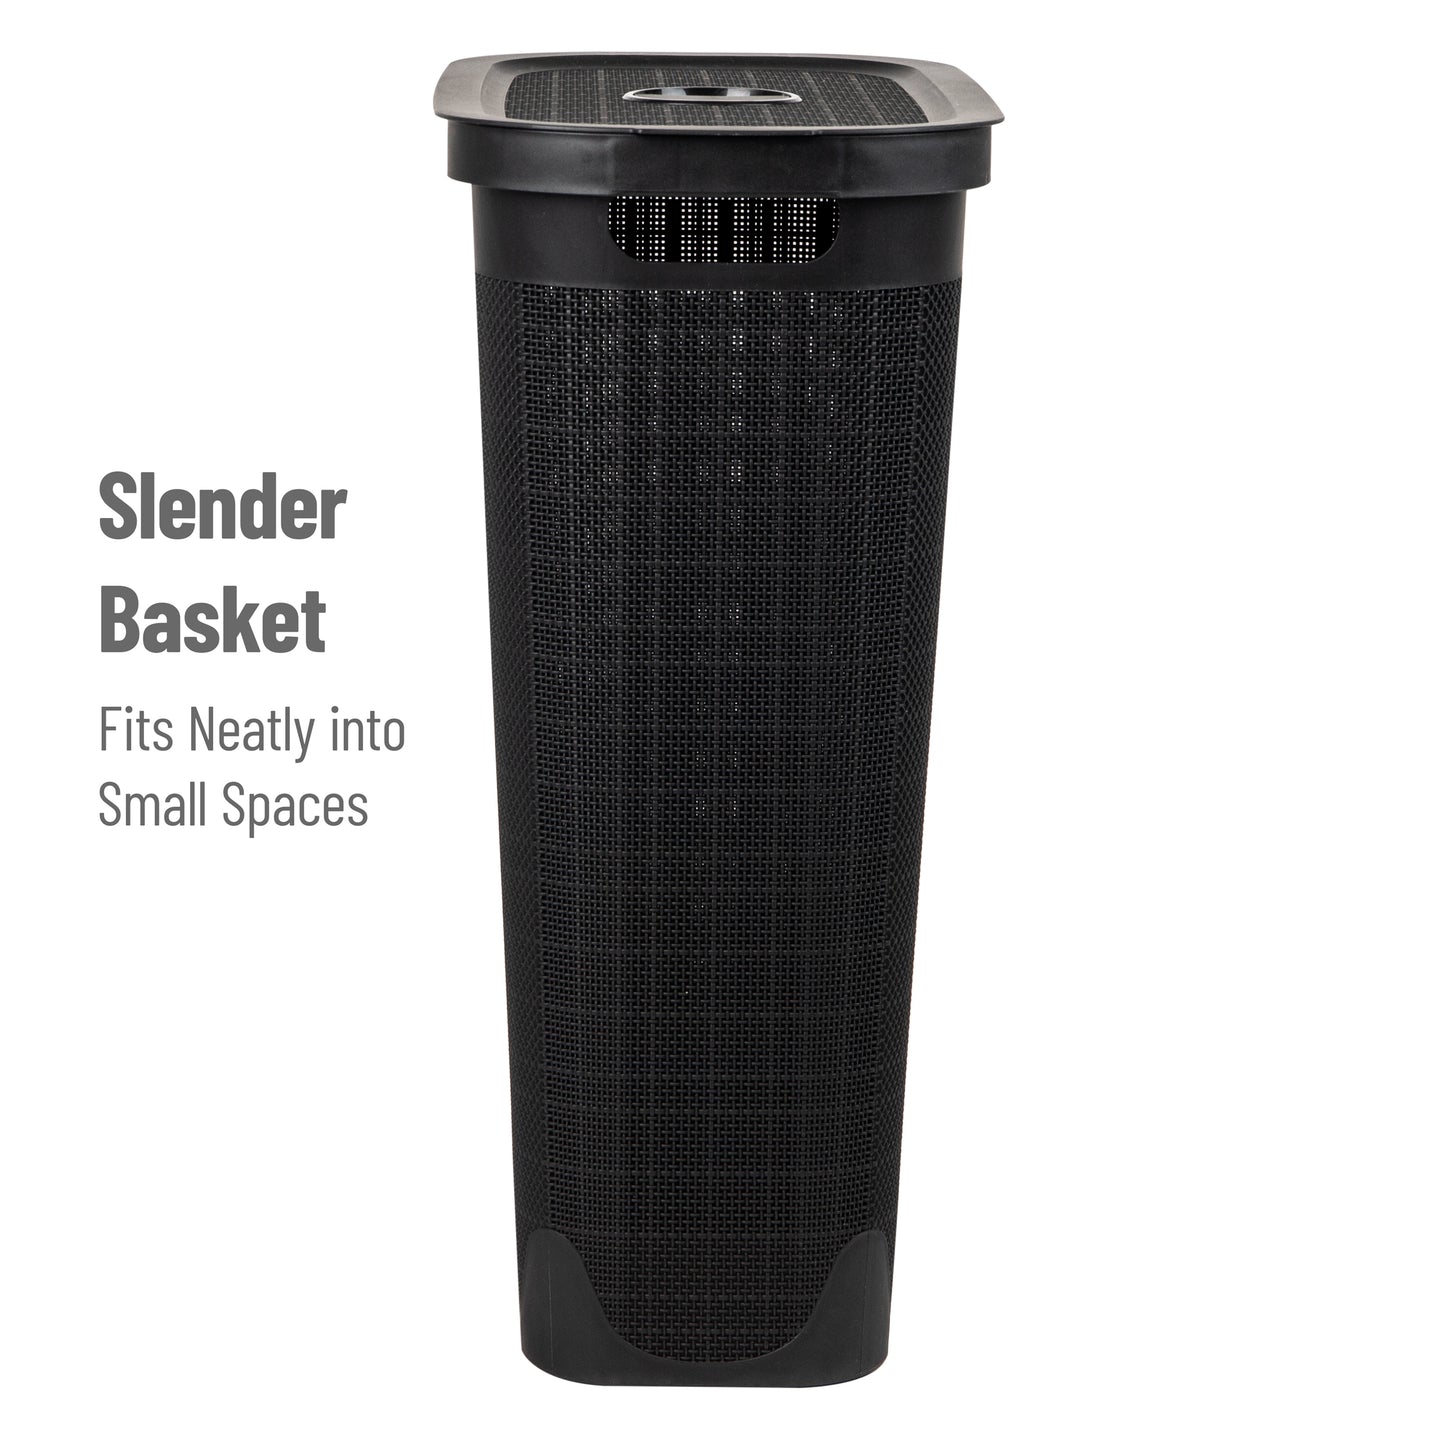 Mind Reader 40L Slim Laundry Hamper, Clothes Basket, Lid, Linen Design, Plastic, 18.5”L x 10.75”W x 23.5”H